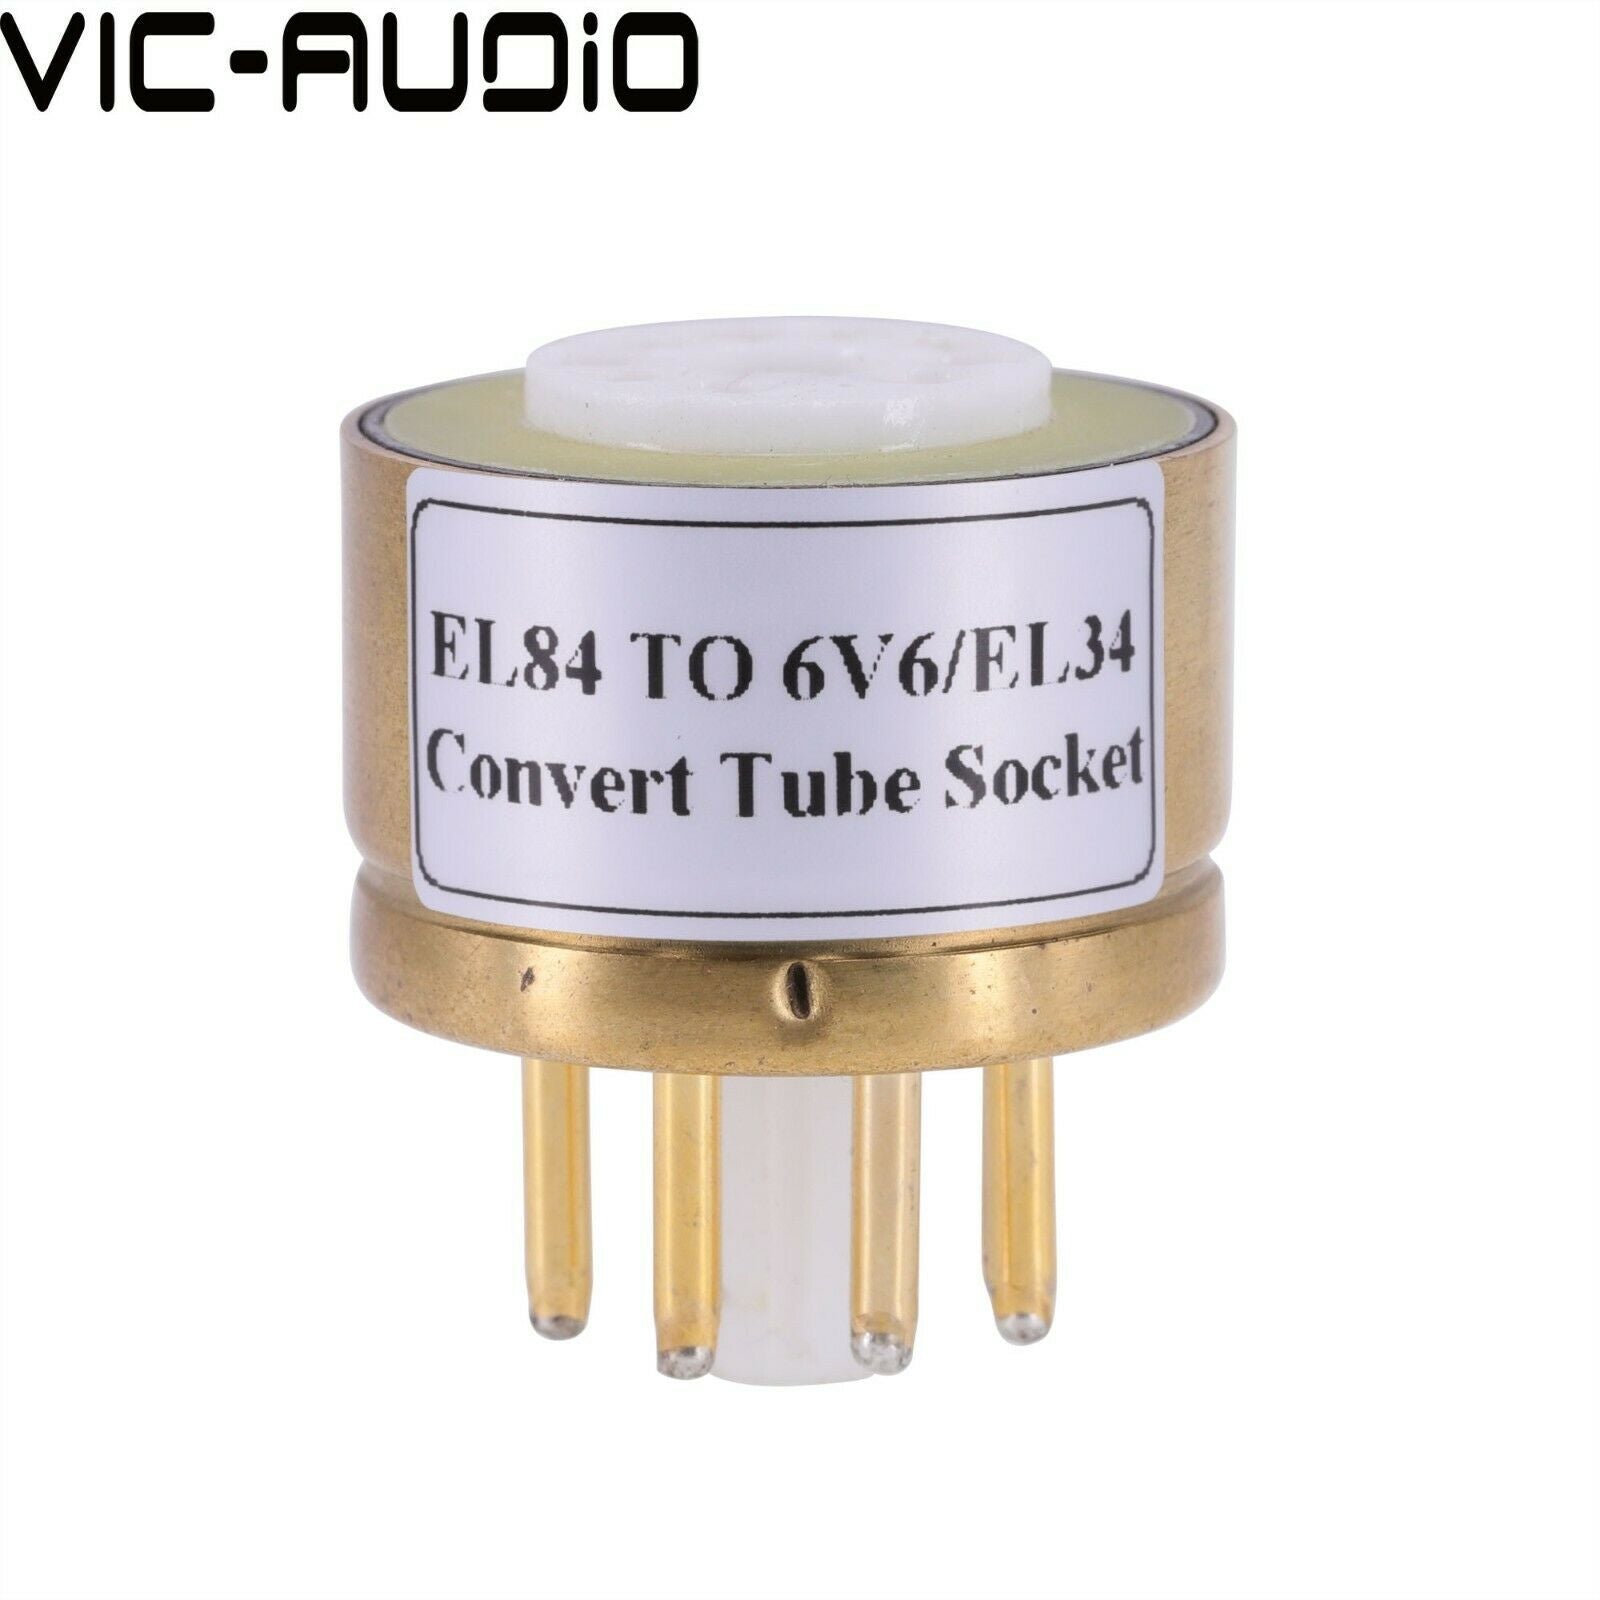 1PC Convert Tube Socket EL84 6P14 TO EL34 6V6 6P3P 6CA7 Tube DIY Adapter Socket